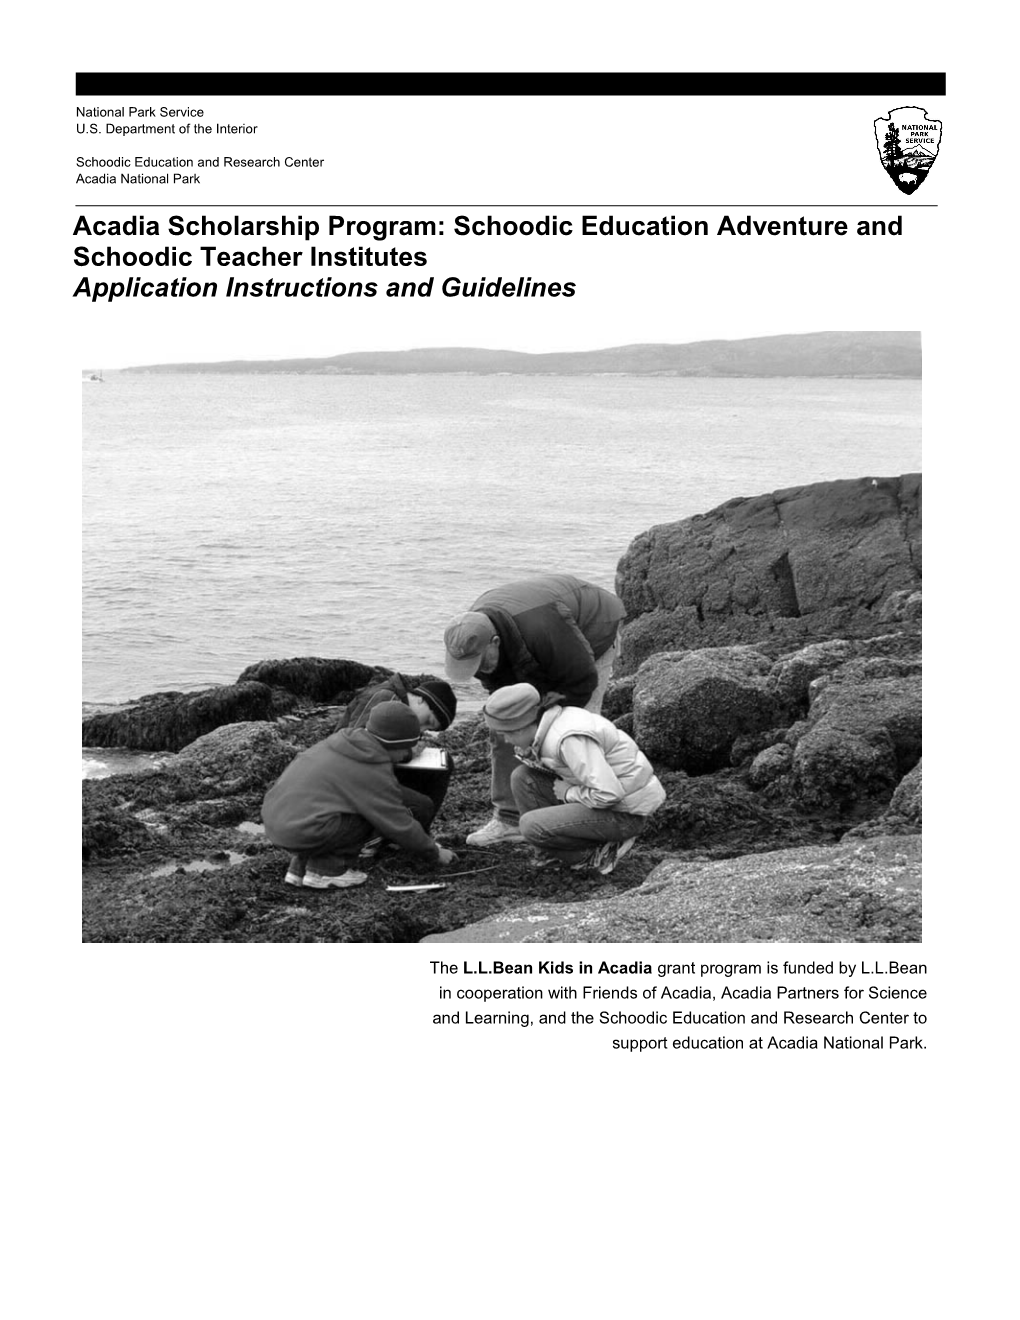 Acadia Scholarship Program: Schoodic Education Adventure and Schoodic Teacher Institutes